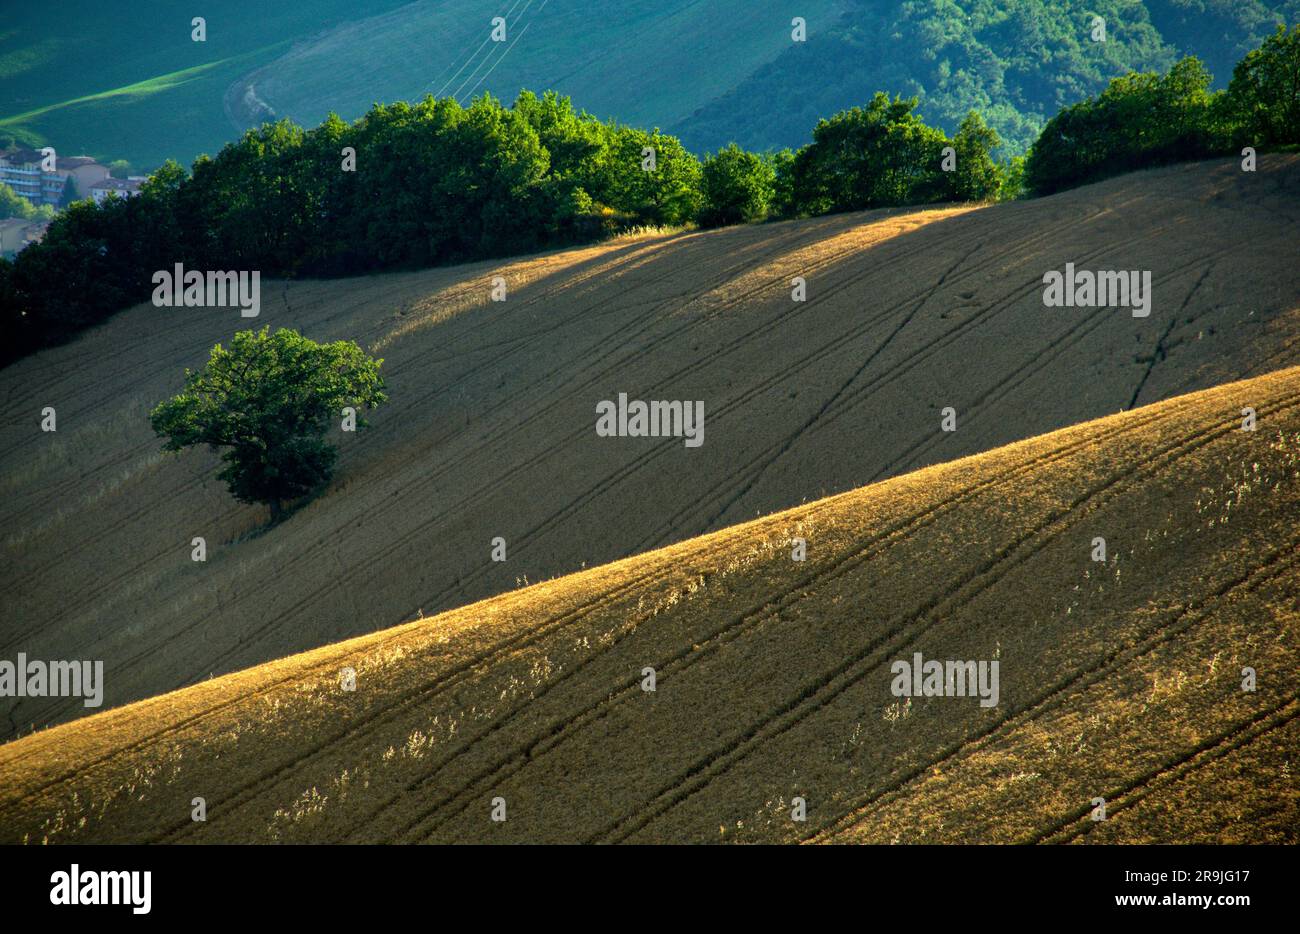 una quercia solitaria en mezzo ad un campo di grano maturo Banque D'Images